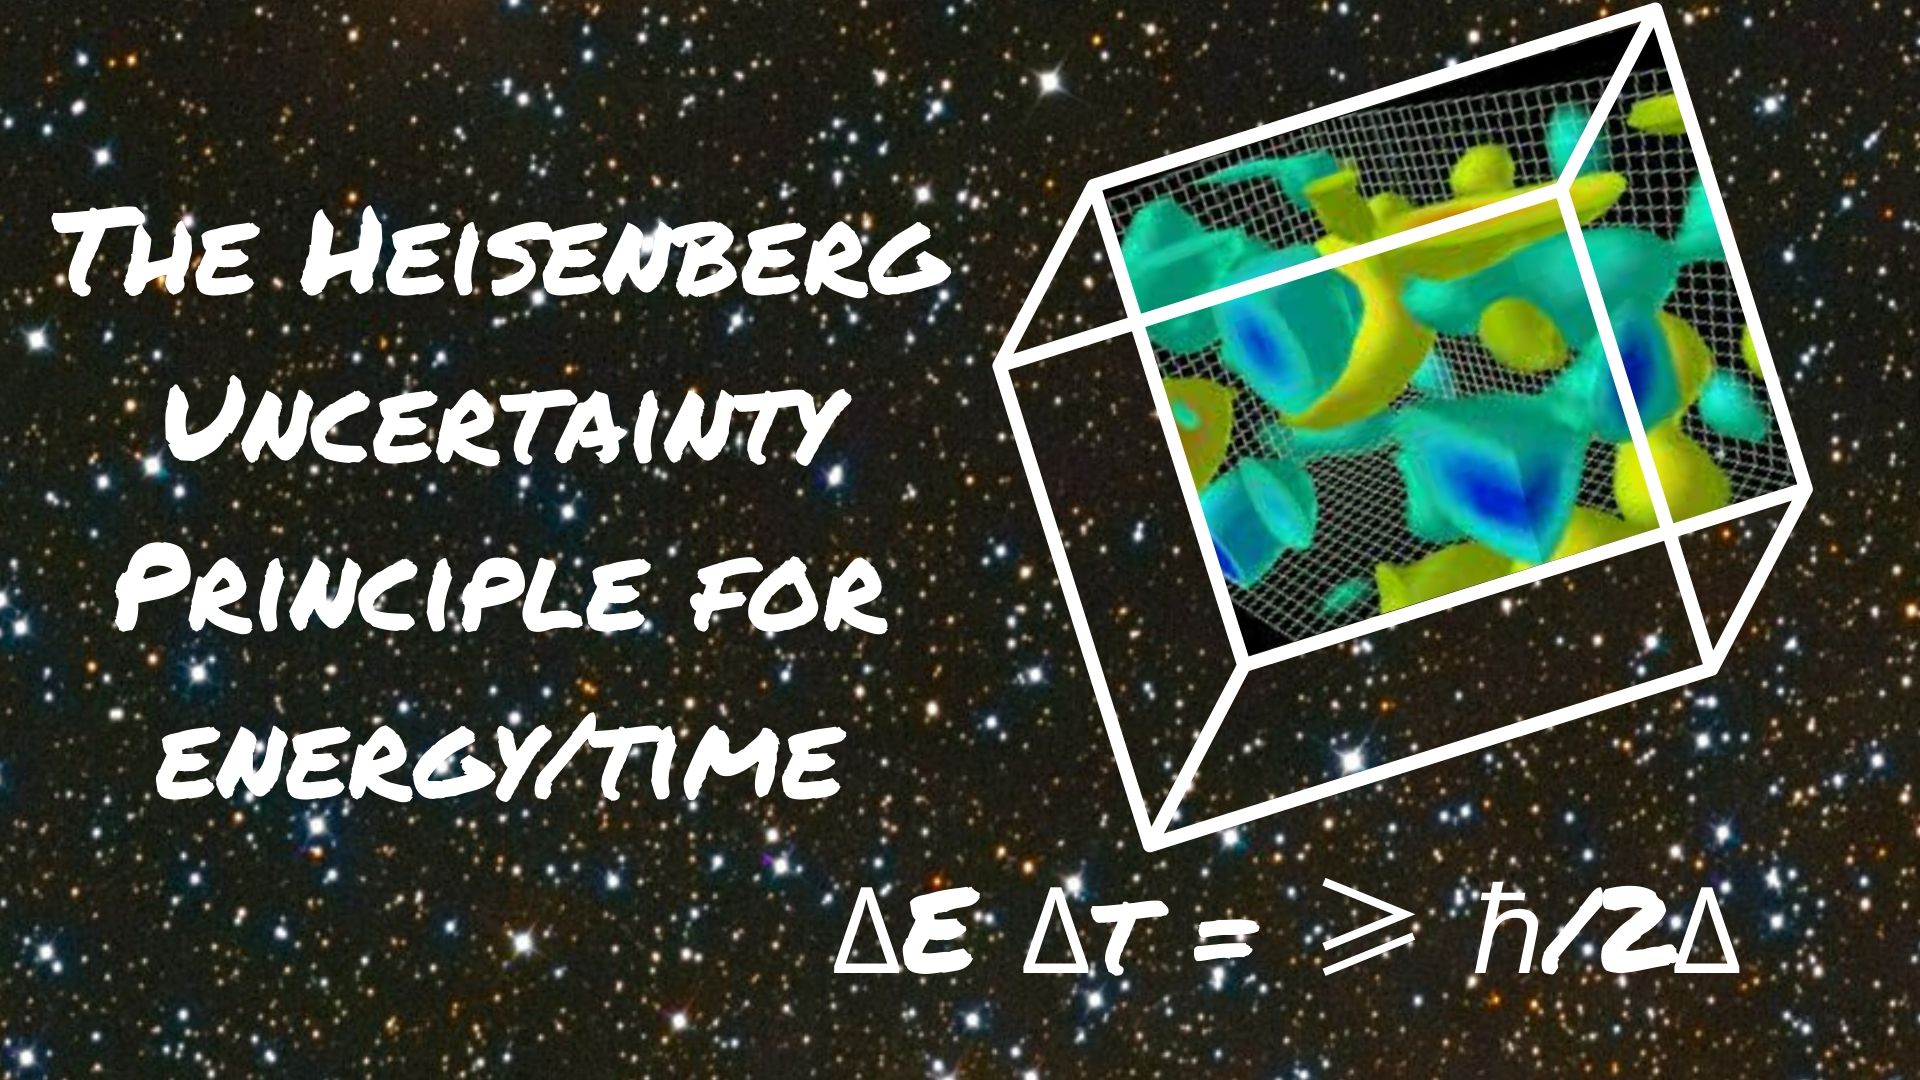 Certainly Uncertain What's Heisenberg's Uncertainty Principle